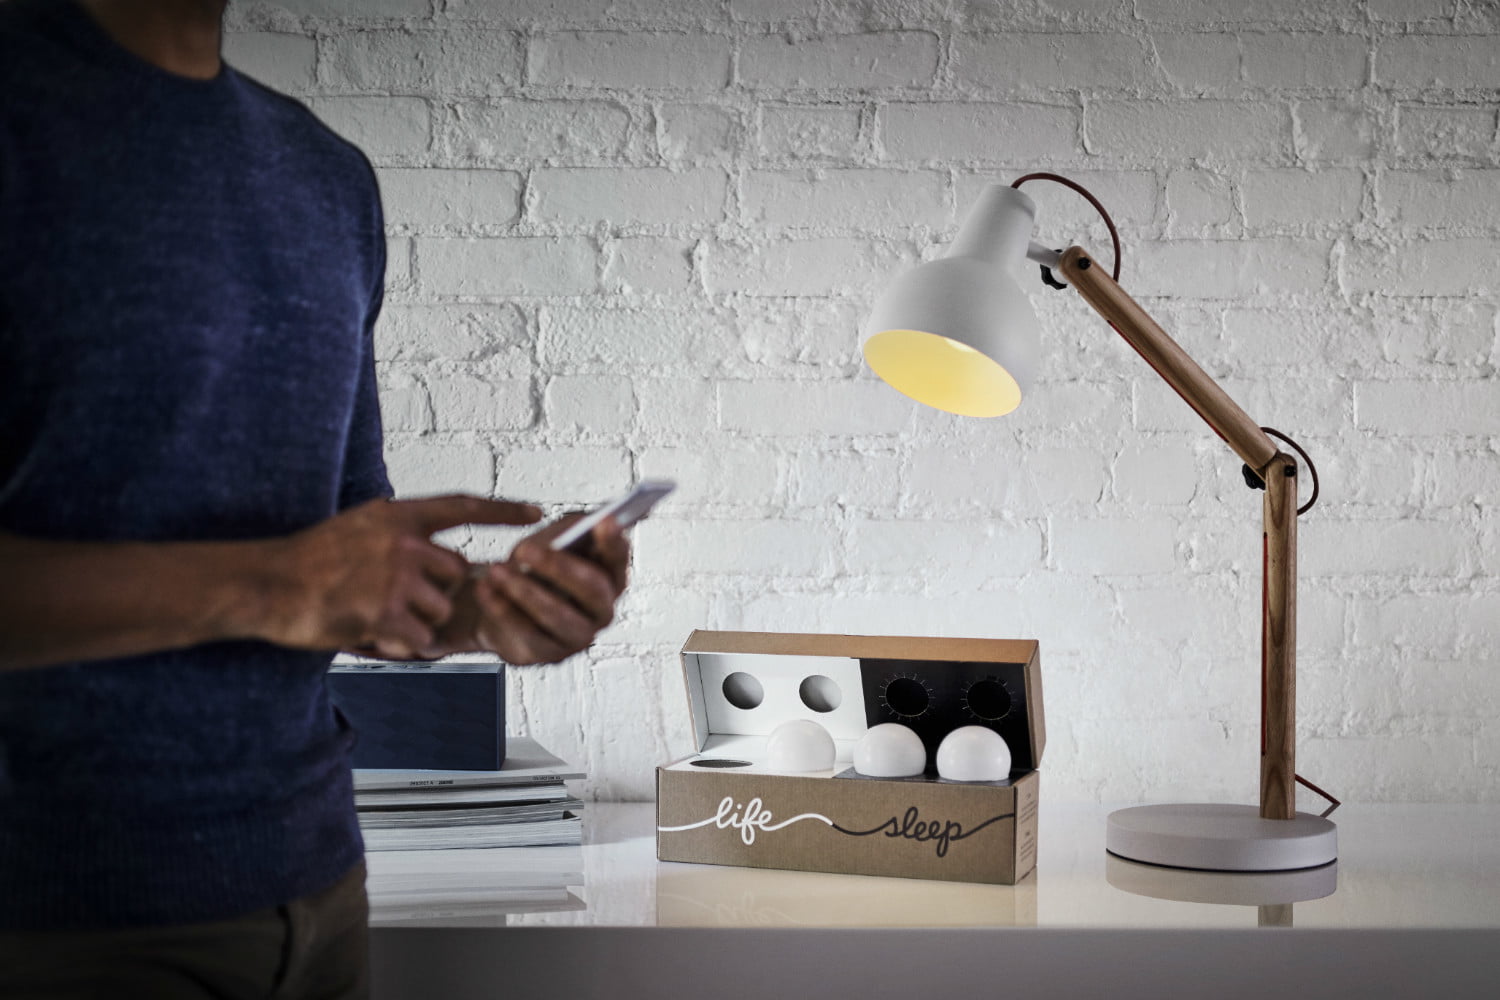 Alexa controlará tu casa a través de una lámpara - Digital Trends Español